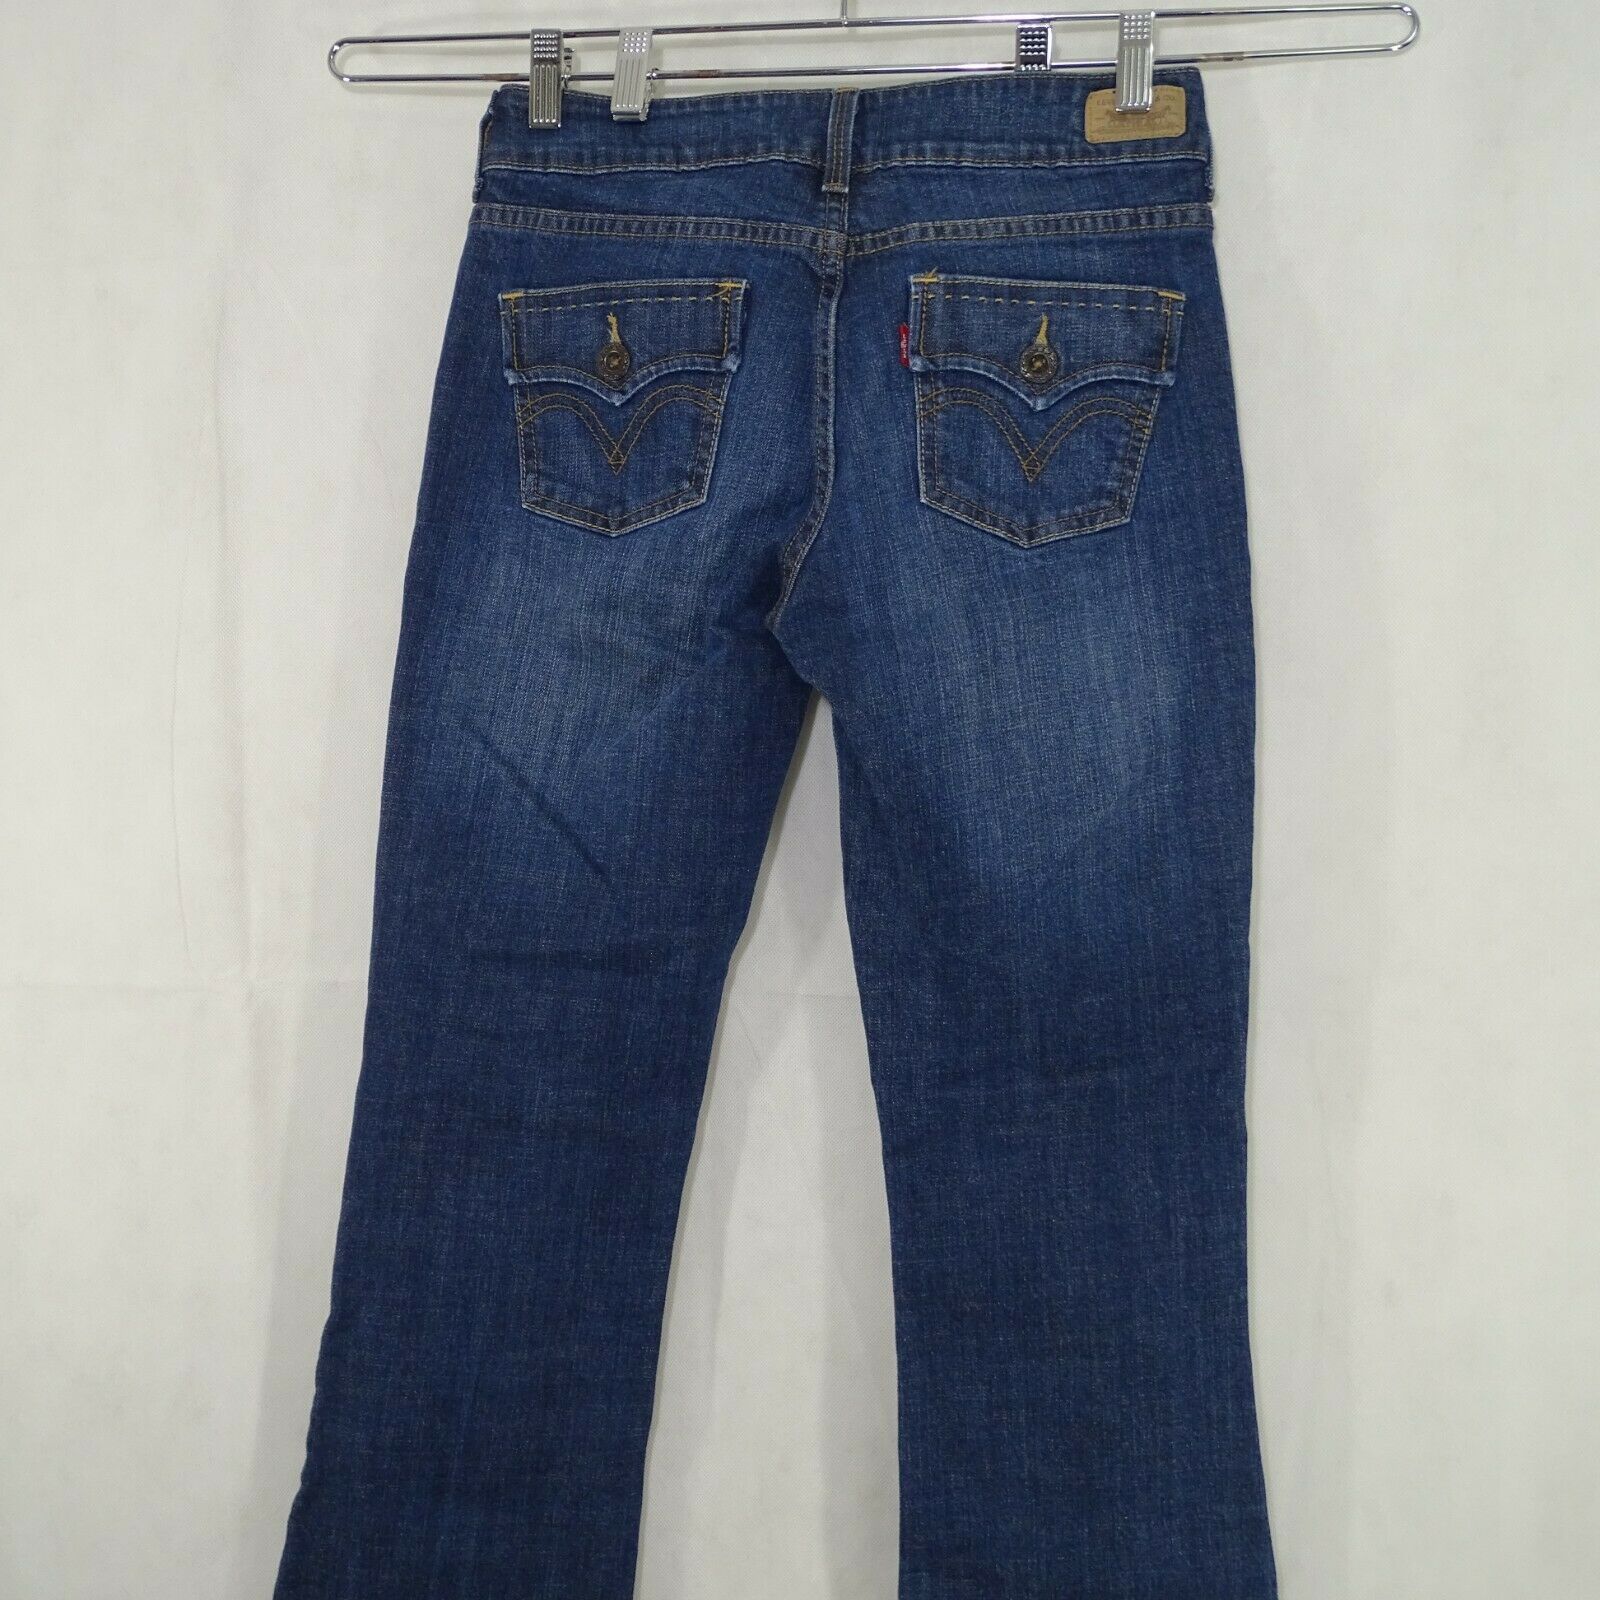 Levis 526 The Original Slender Boot Cut Jeans Women Size 4 Flap Pockets ...